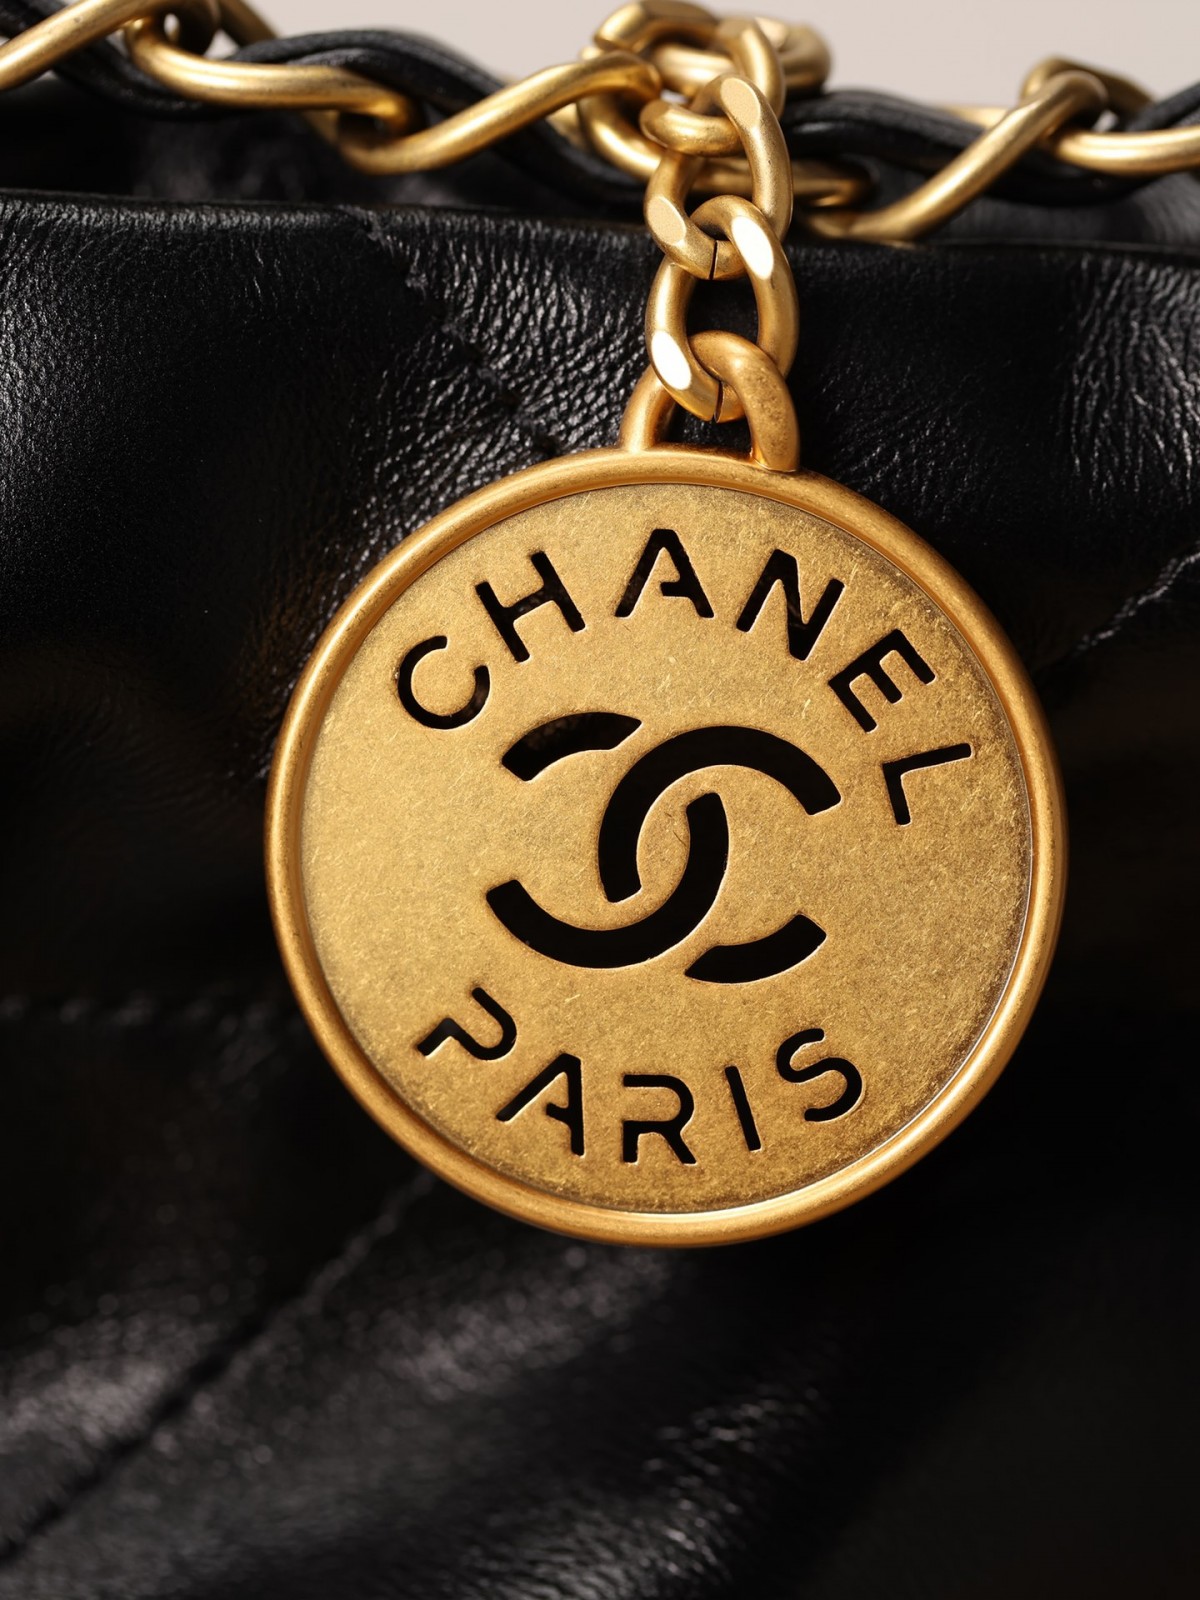 What is highest quality Chanel 22 bag looks like？（2023 Week 37）-ਵਧੀਆ ਕੁਆਲਿਟੀ ਨਕਲੀ ਲੁਈਸ ਵਿਟਨ ਬੈਗ ਔਨਲਾਈਨ ਸਟੋਰ, ਰਿਪਲੀਕਾ ਡਿਜ਼ਾਈਨਰ ਬੈਗ ru